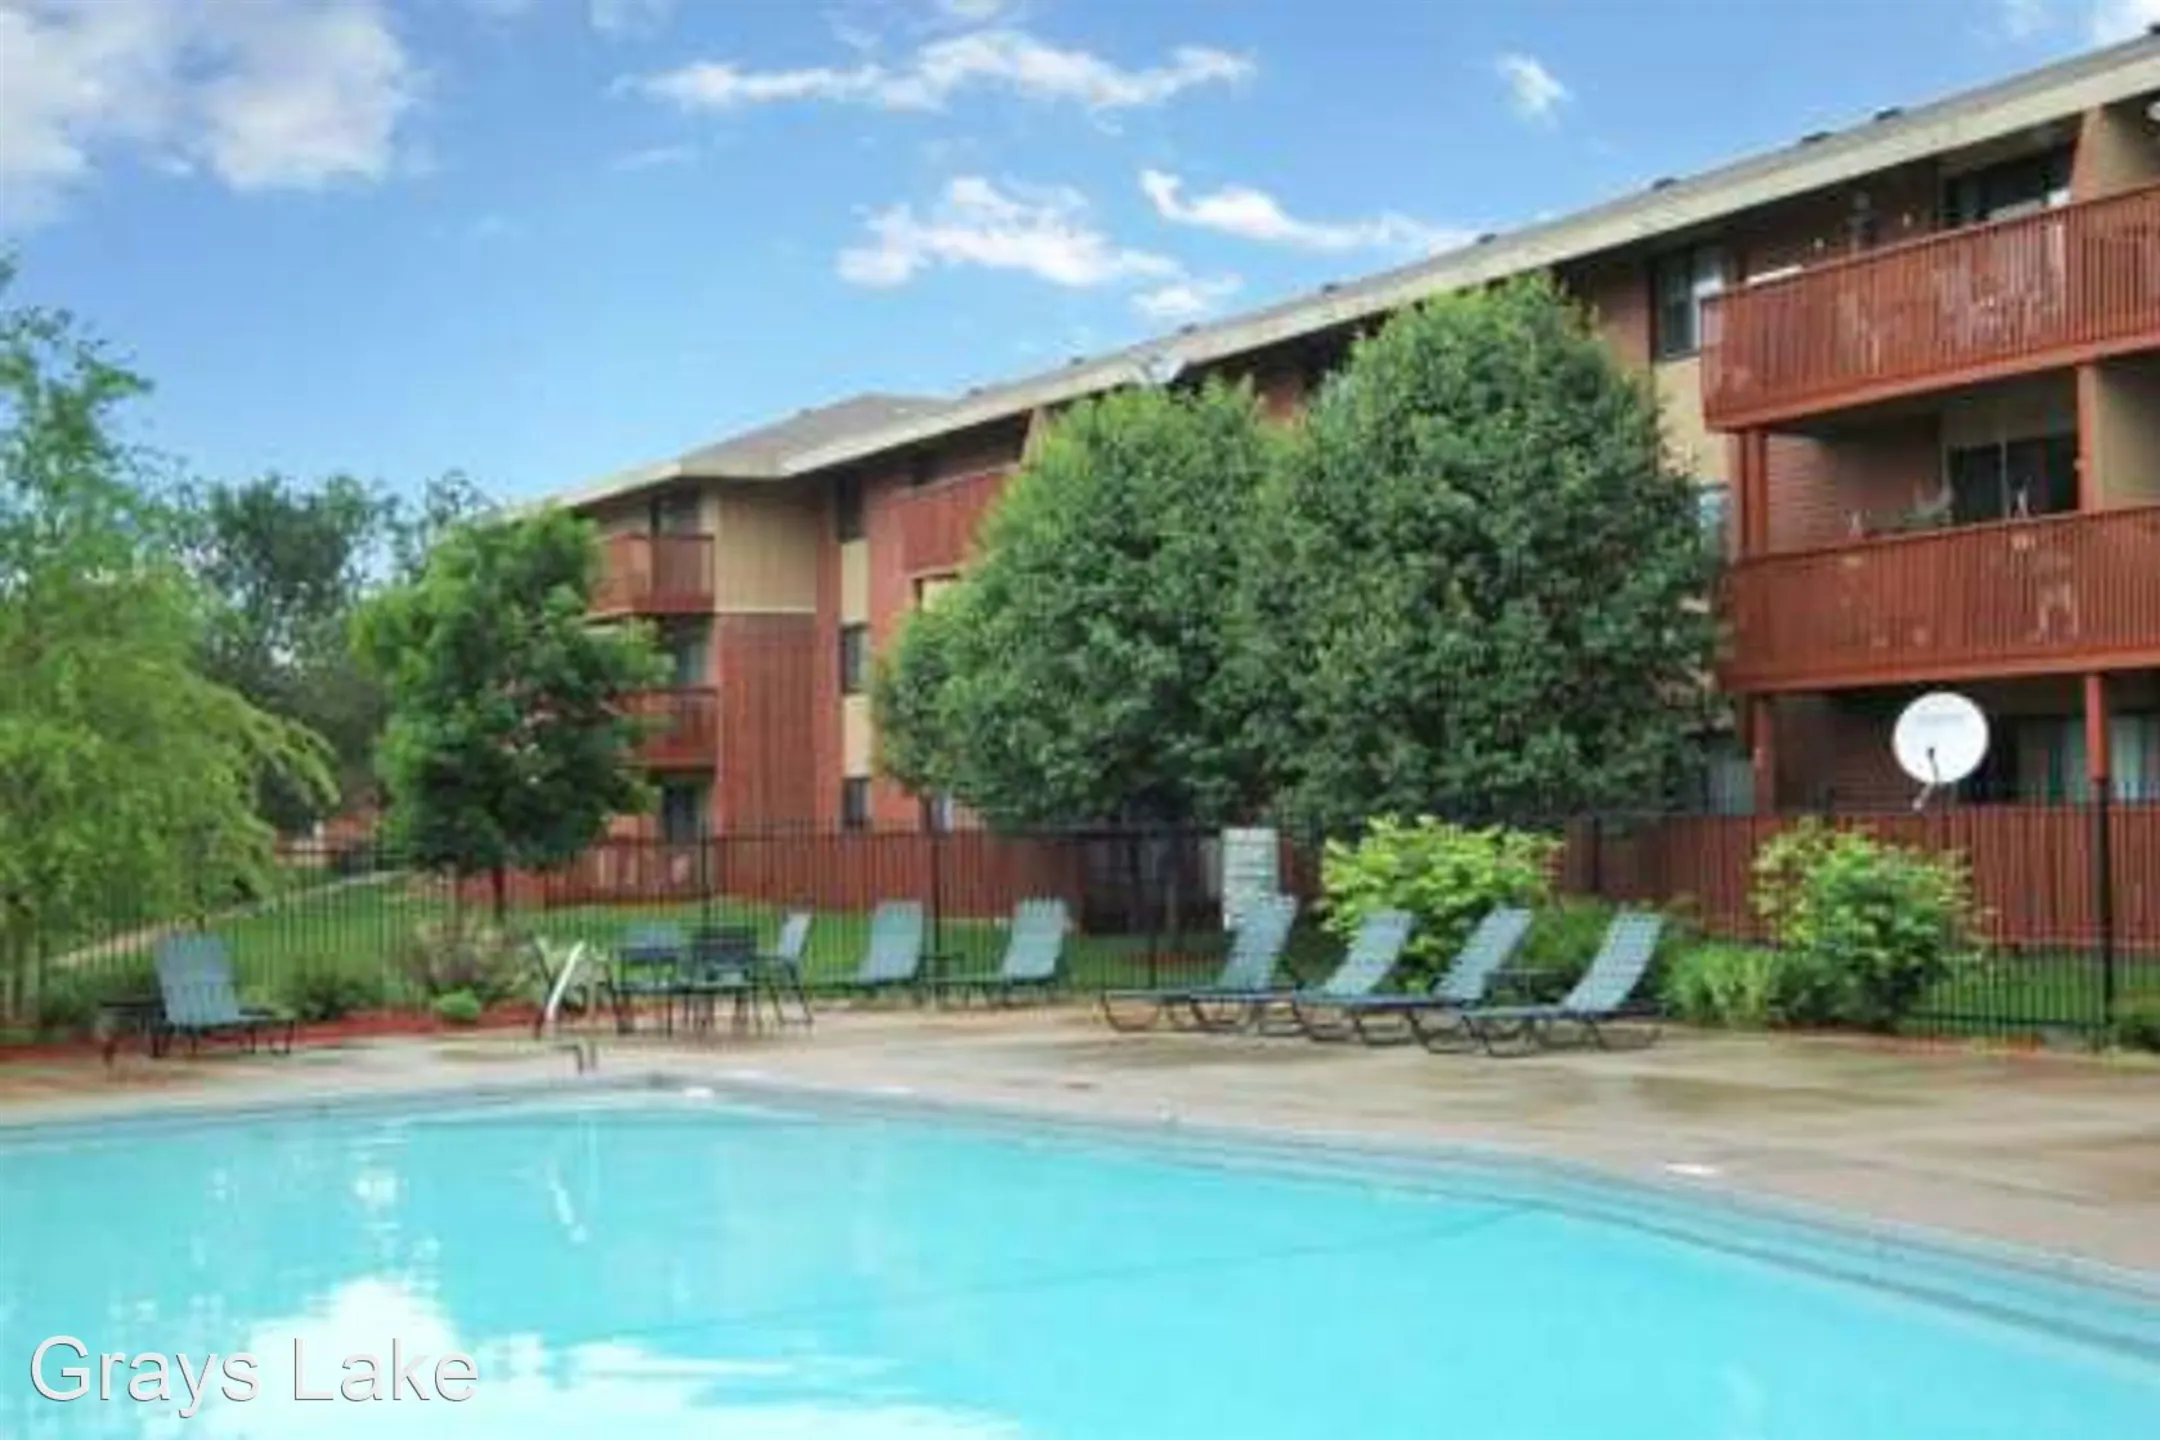 Pool - Gray's Lake Apartments - Des Moines, IA